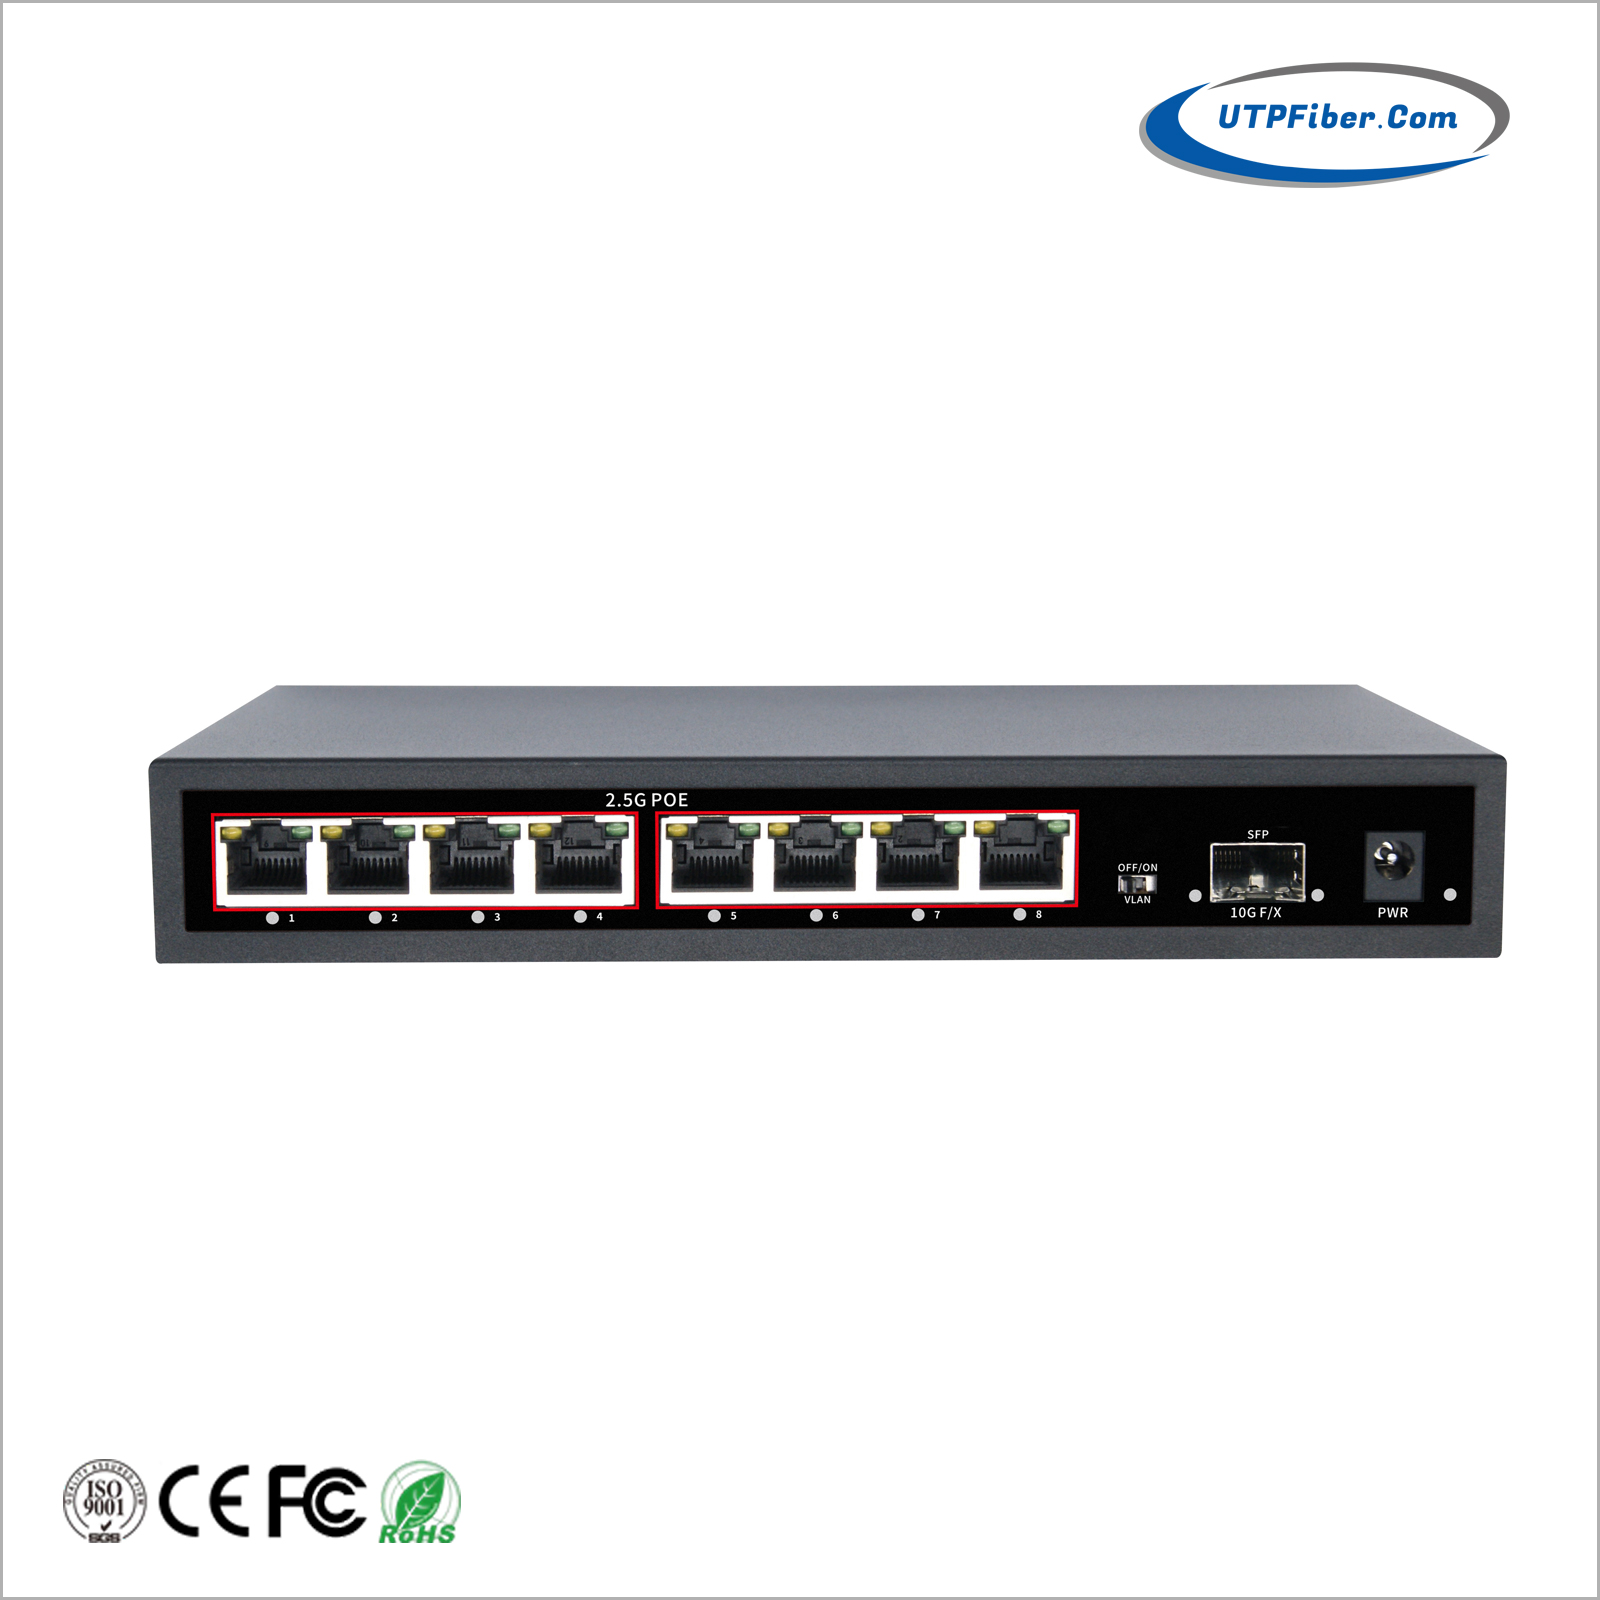 8-Port 2.5G 802.3at PoE + 1-Port 10G Base-X SFP+ Multi-Gigabit Ethernet Switch